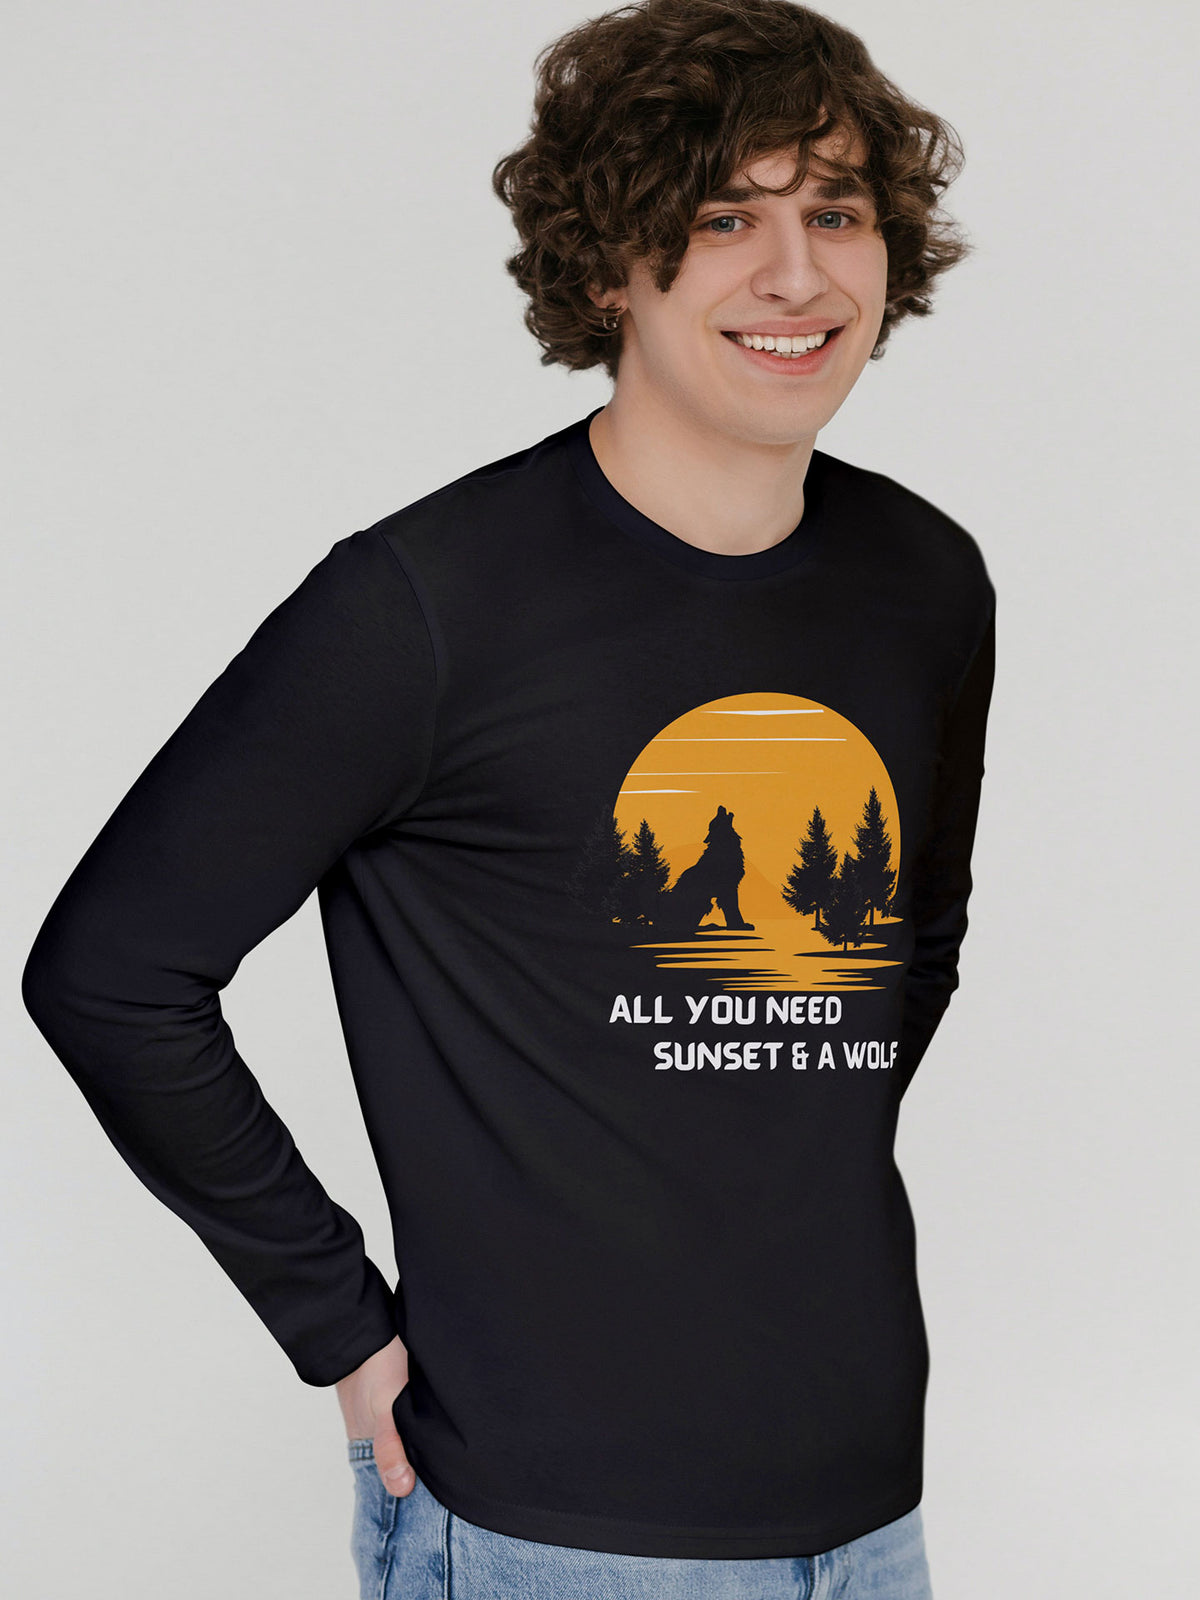 Men's Black All You Need SunSet Printed Full-Sleeve T-shirt